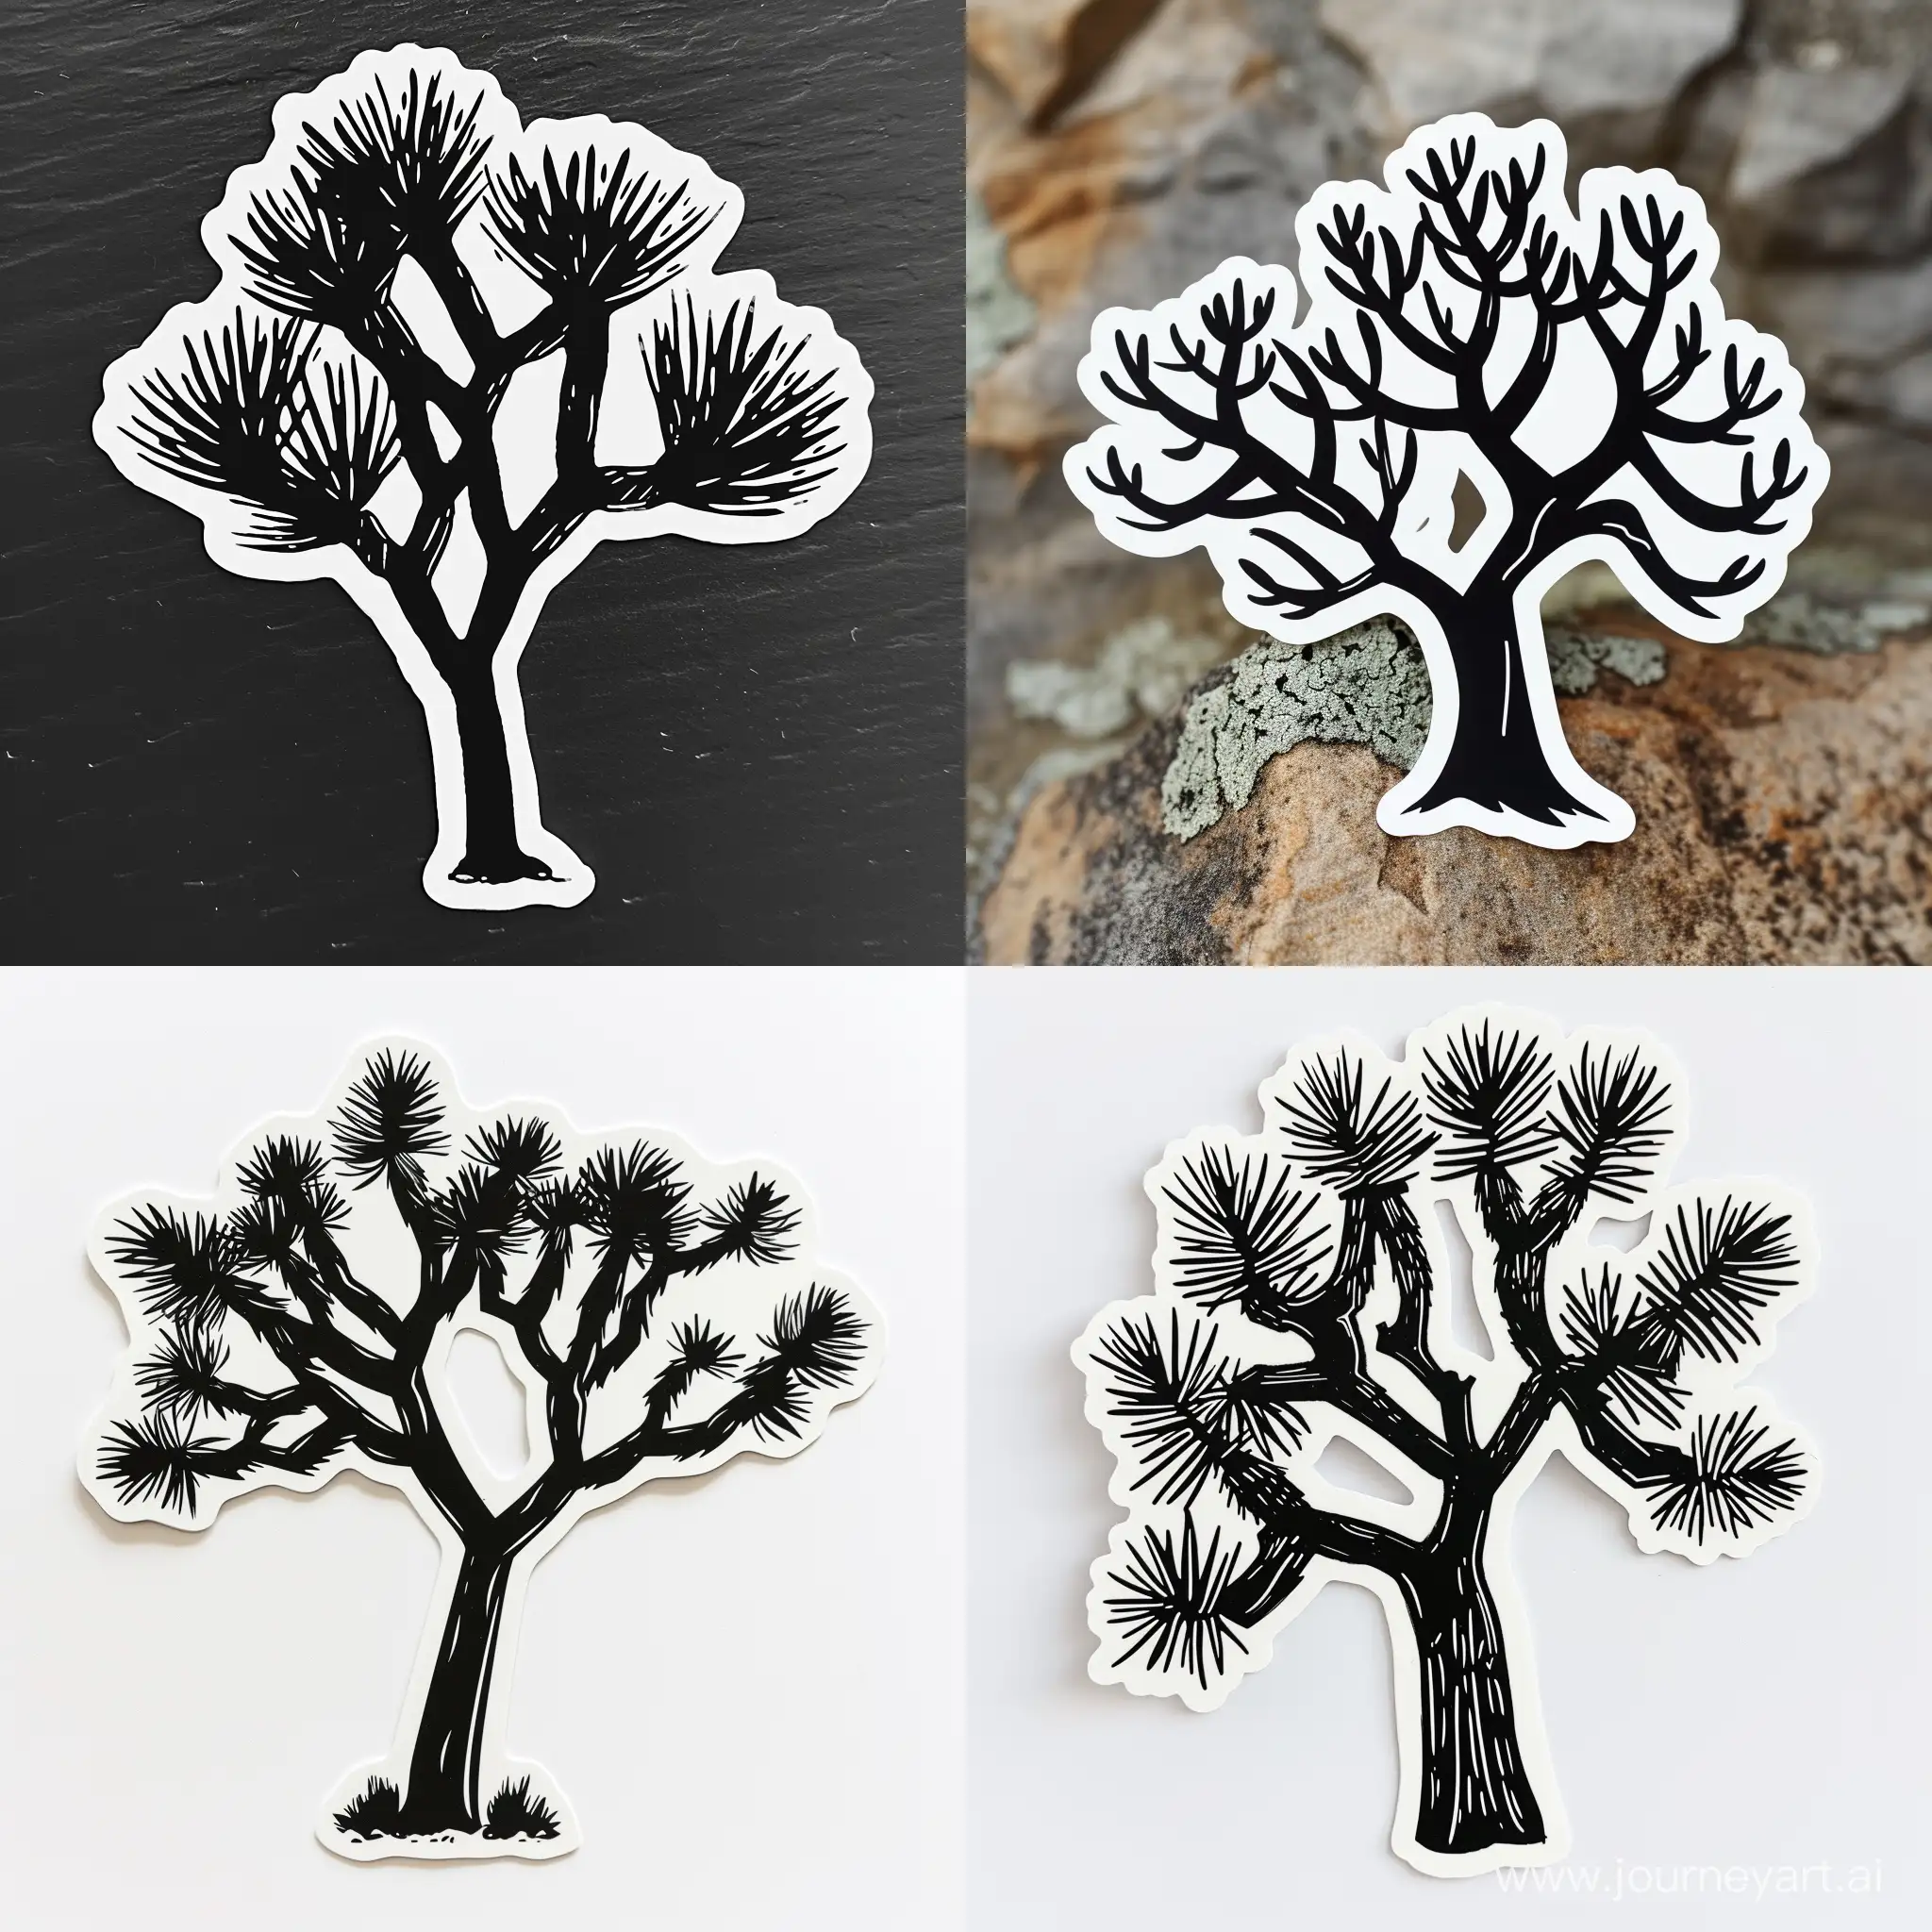 Minimalistic-Black-and-White-Sticker-of-a-Joshua-Tree